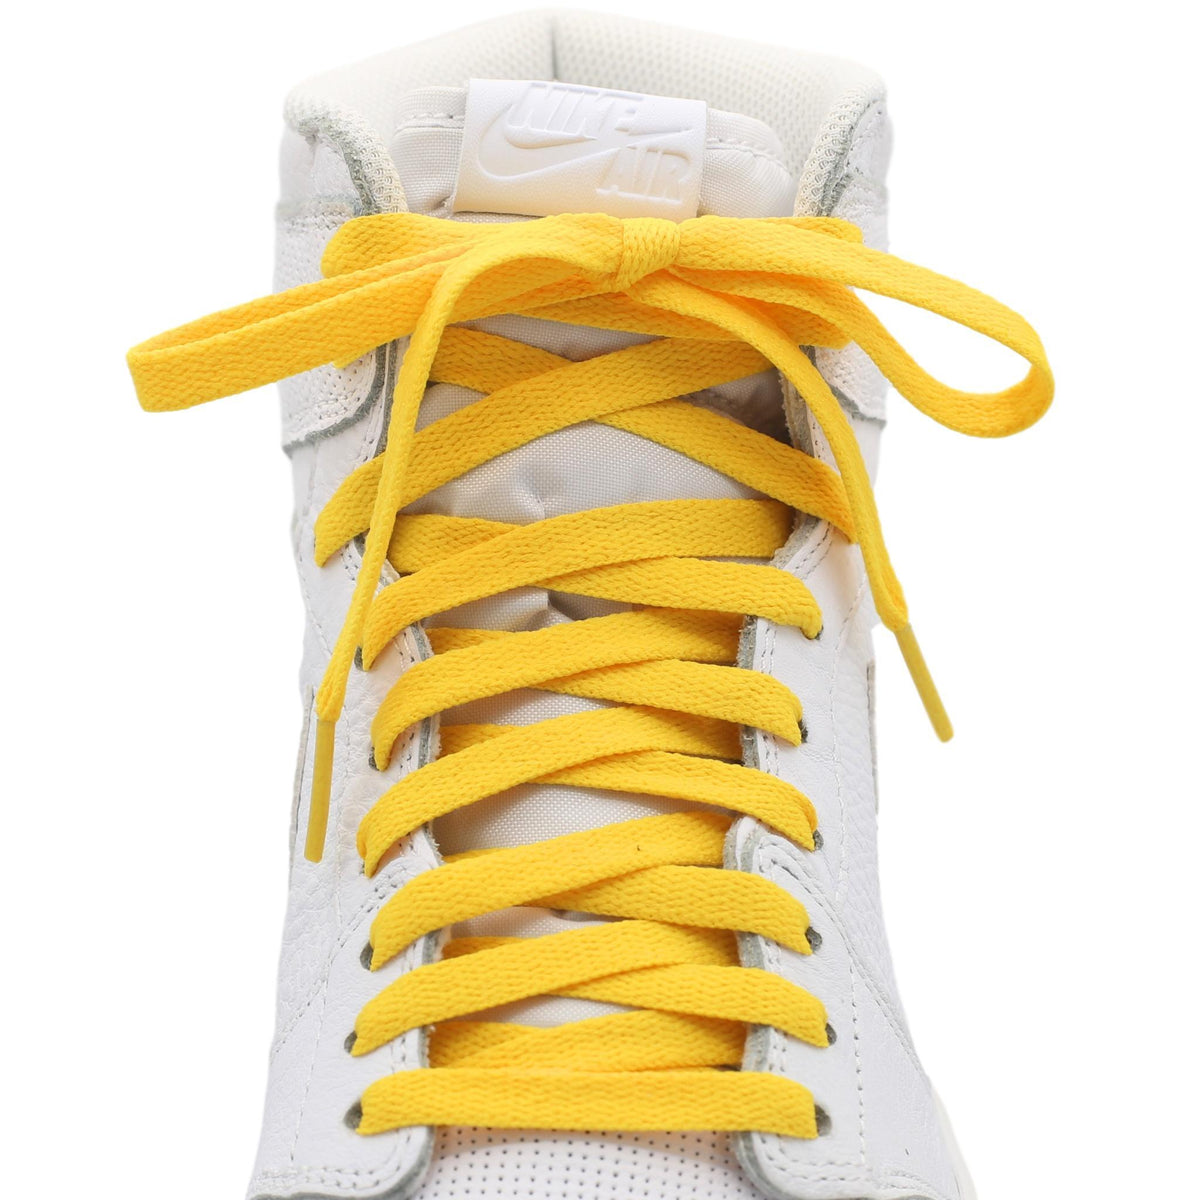 mustard shoe laces